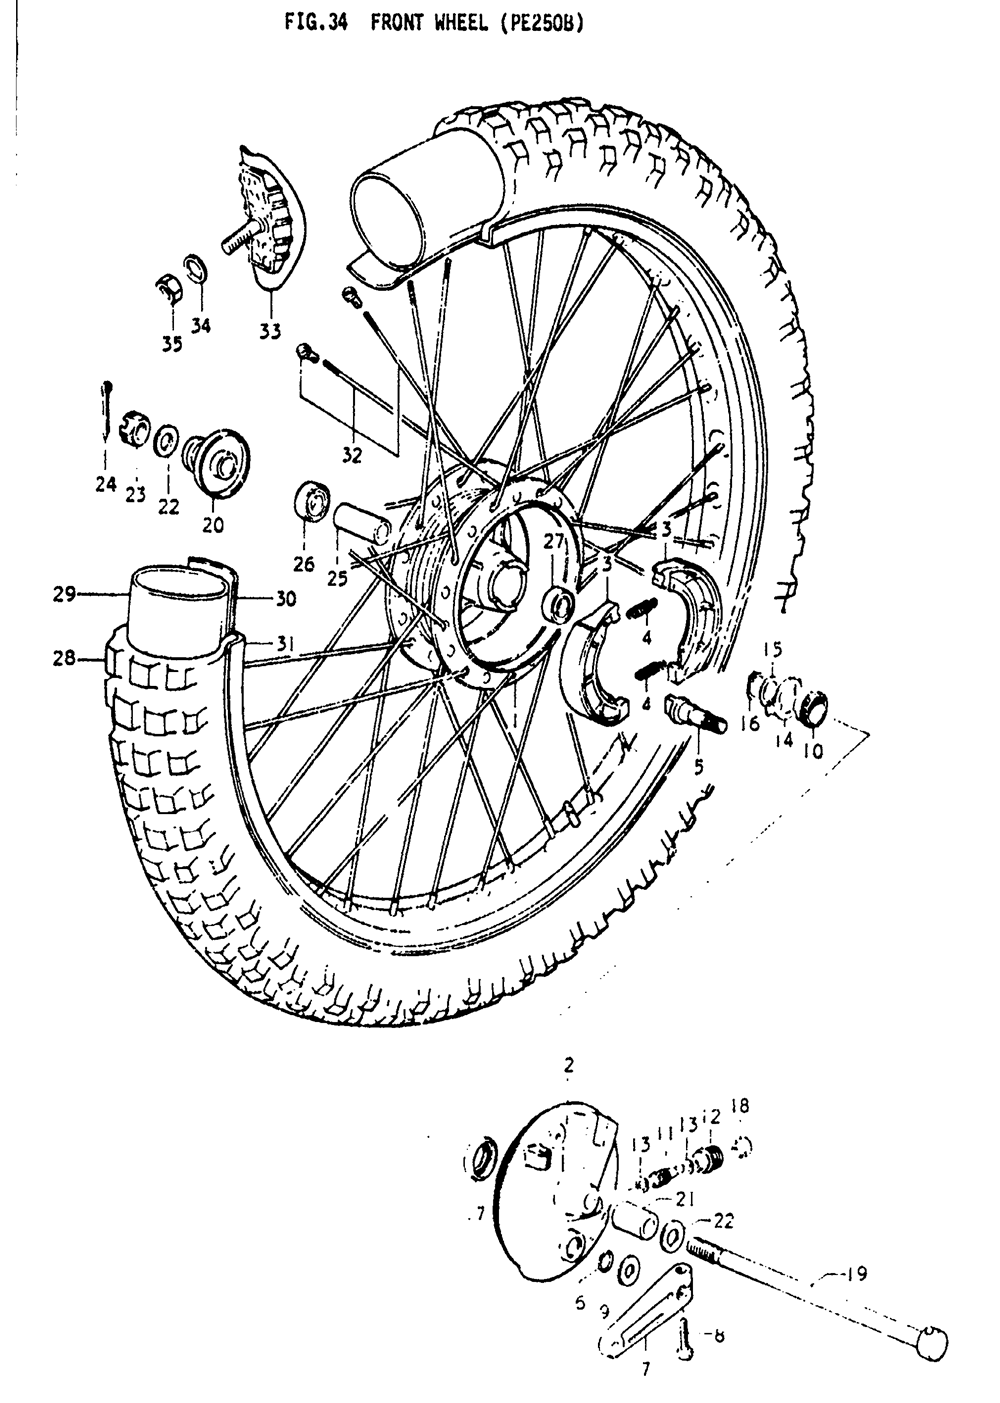 Front wheel (pe250b)